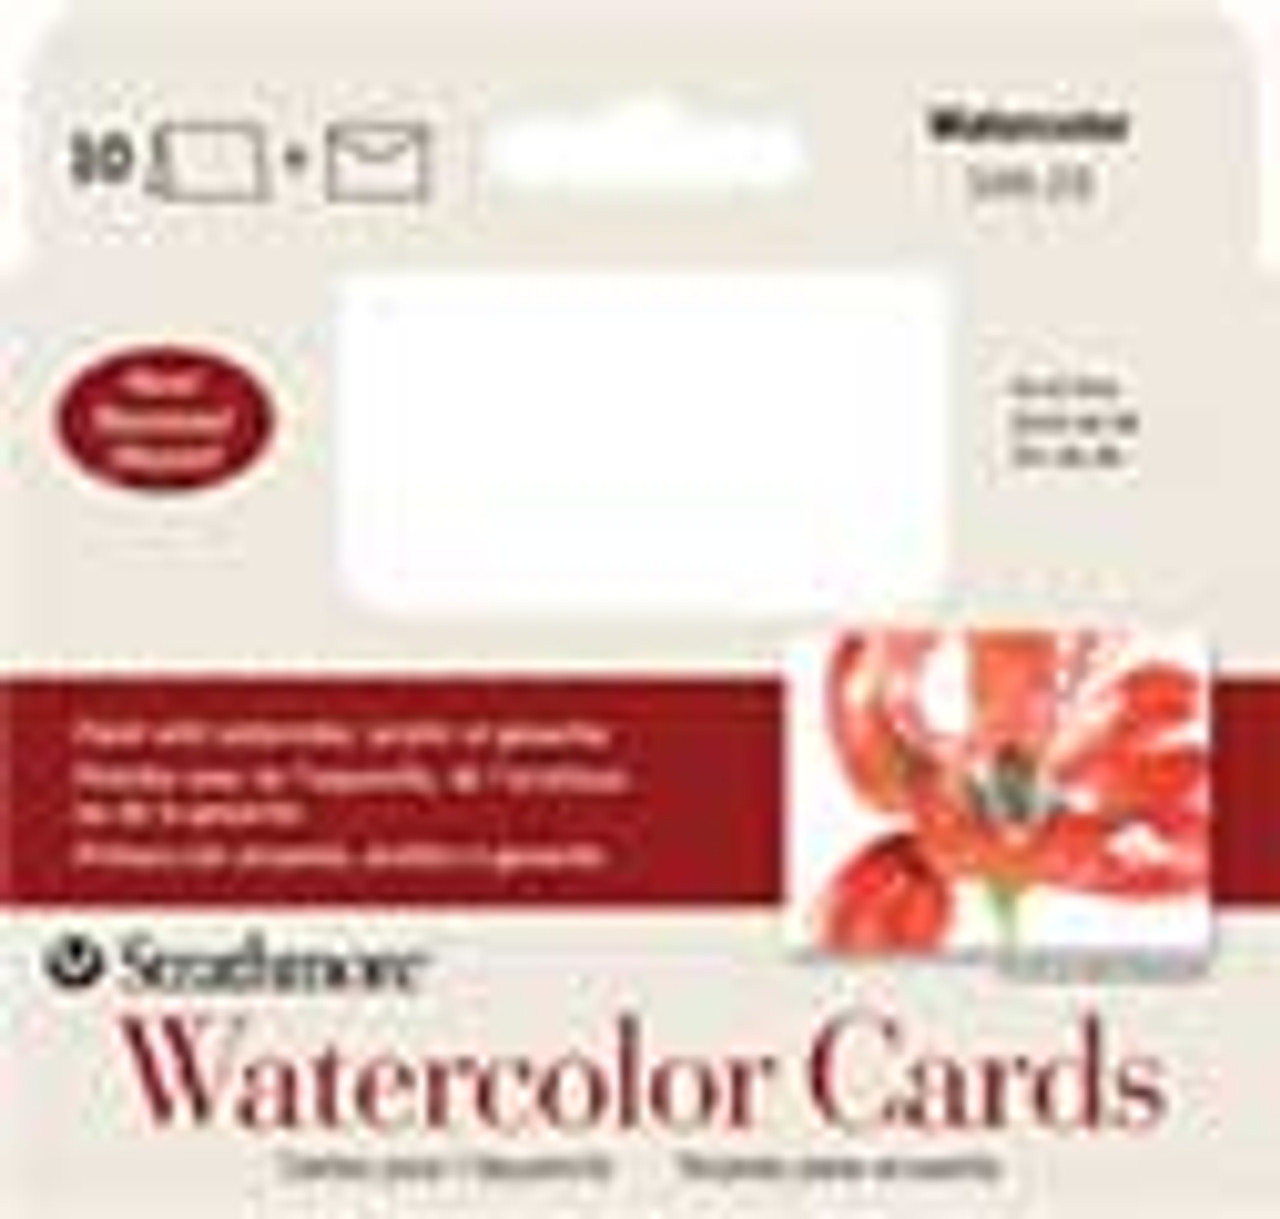 Strathmore Slim Watercolor Cards